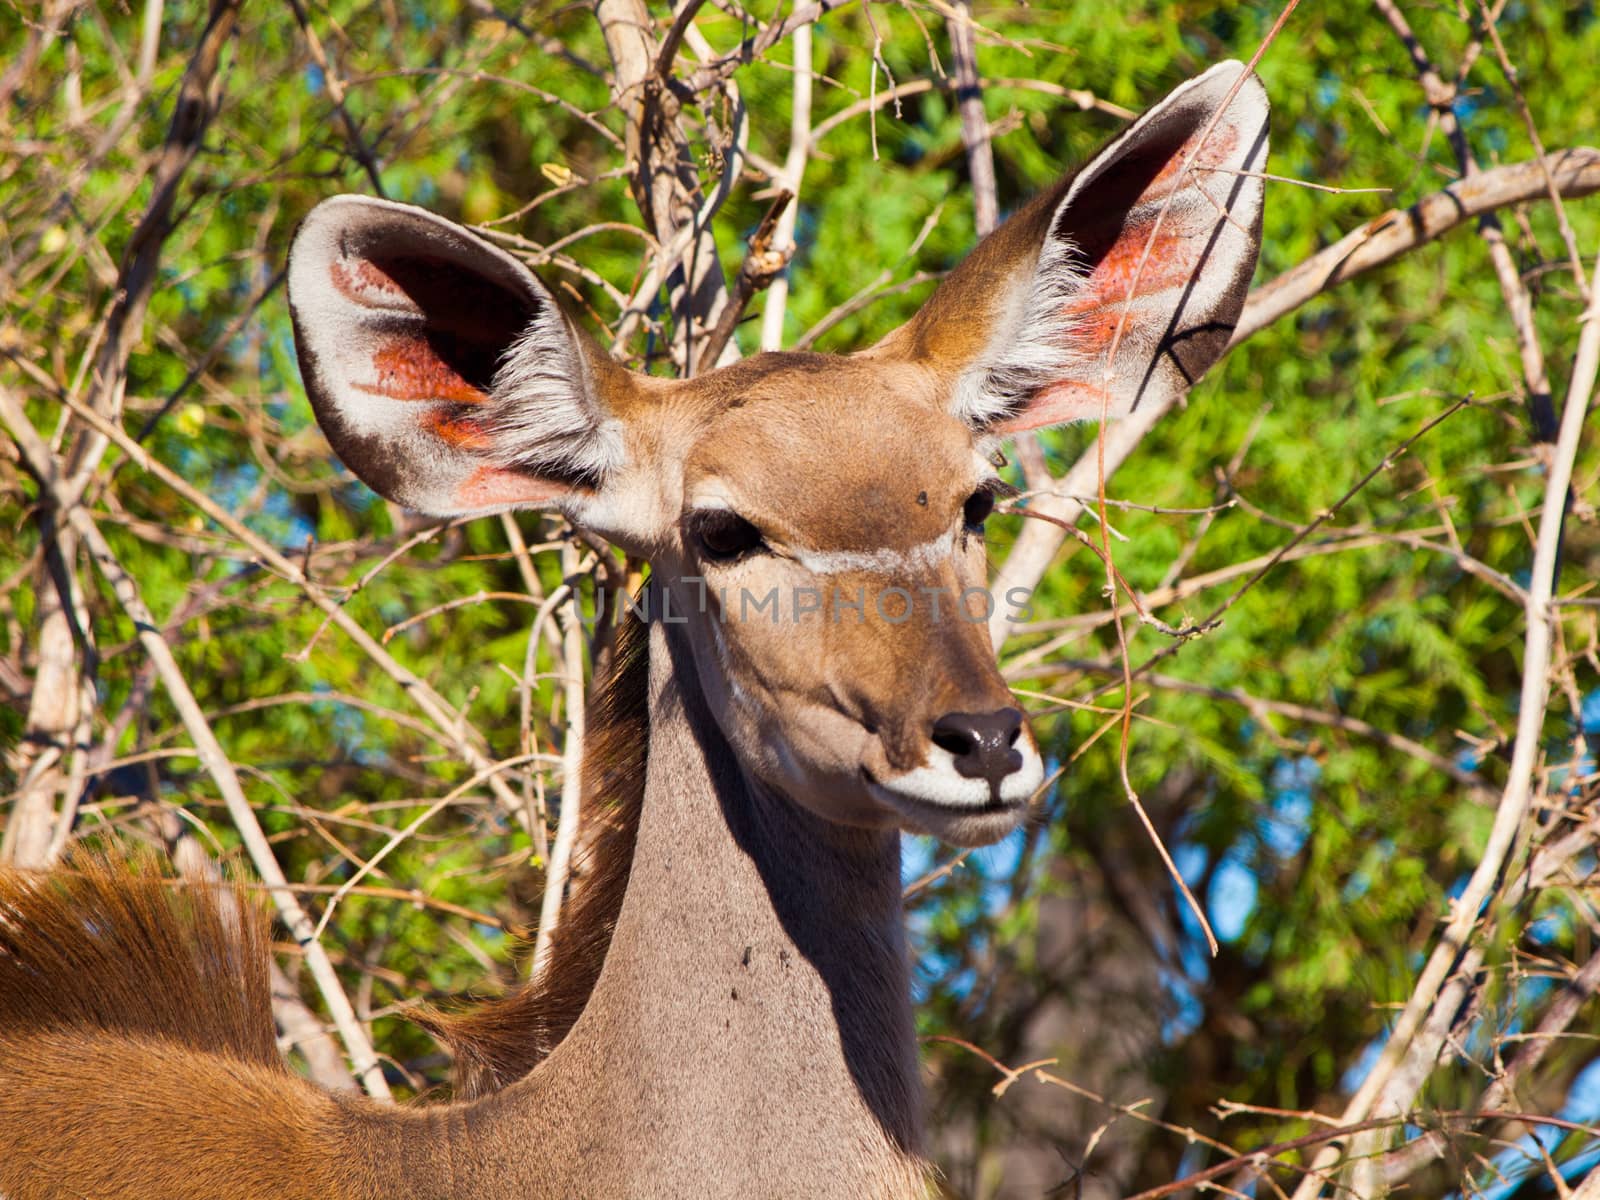 Female kudu antelope (Moremi Game Reserve, Botswana)